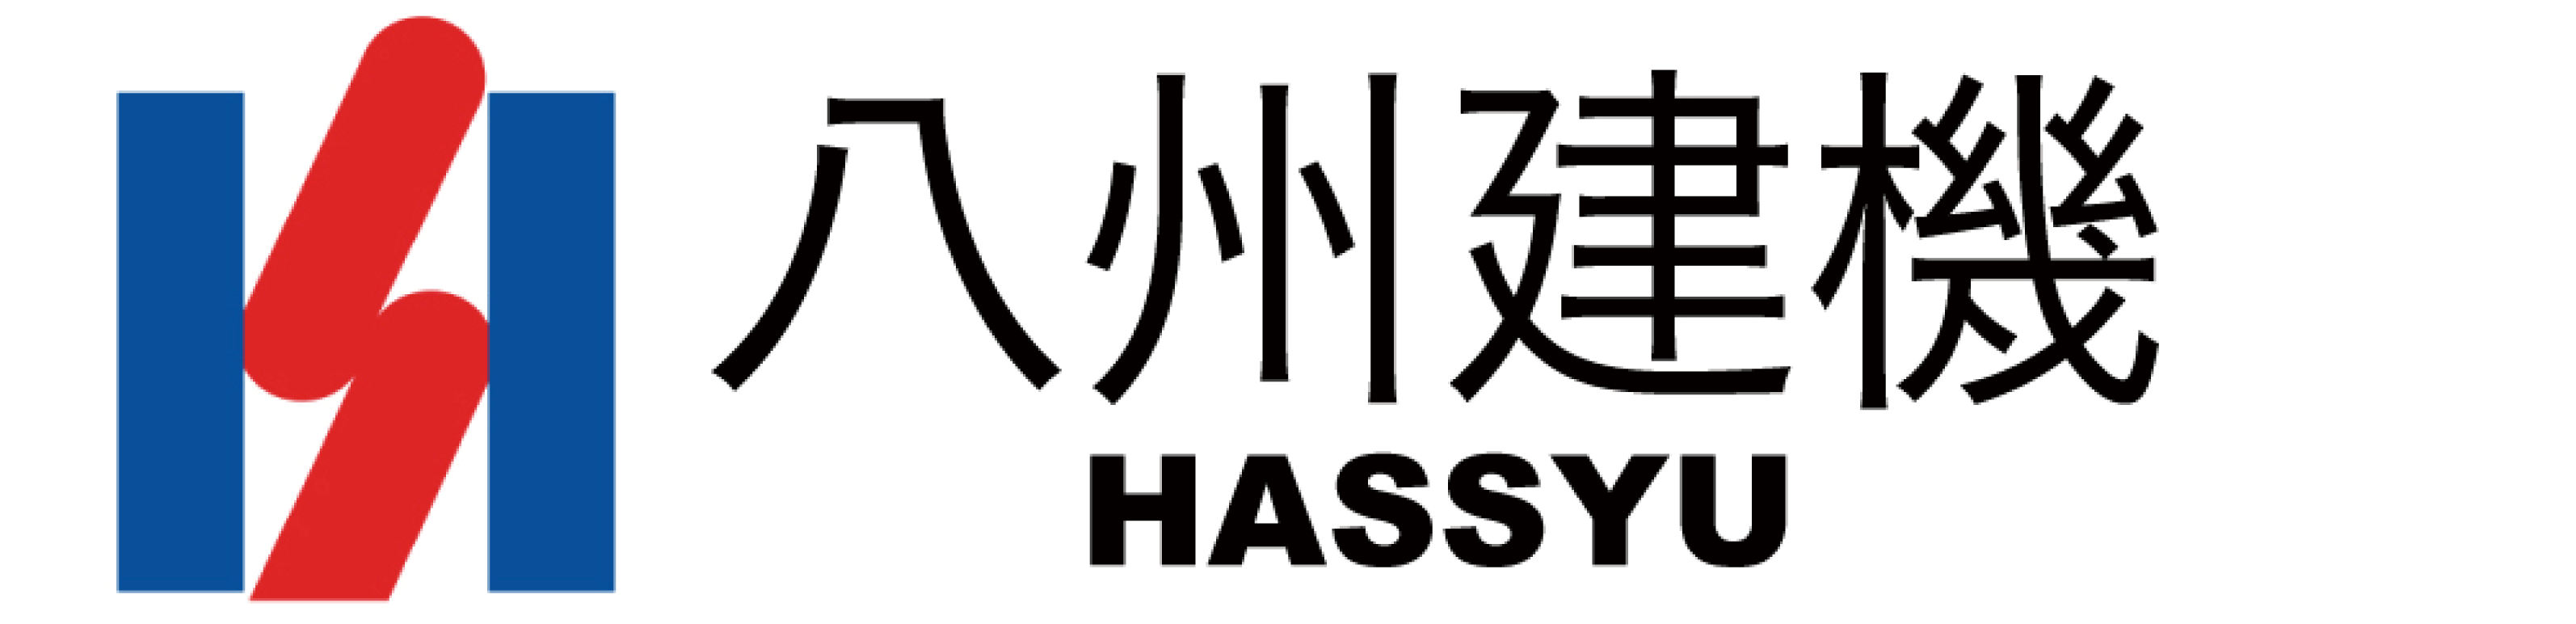 2020 Hassyu kenki Co., Ltd.